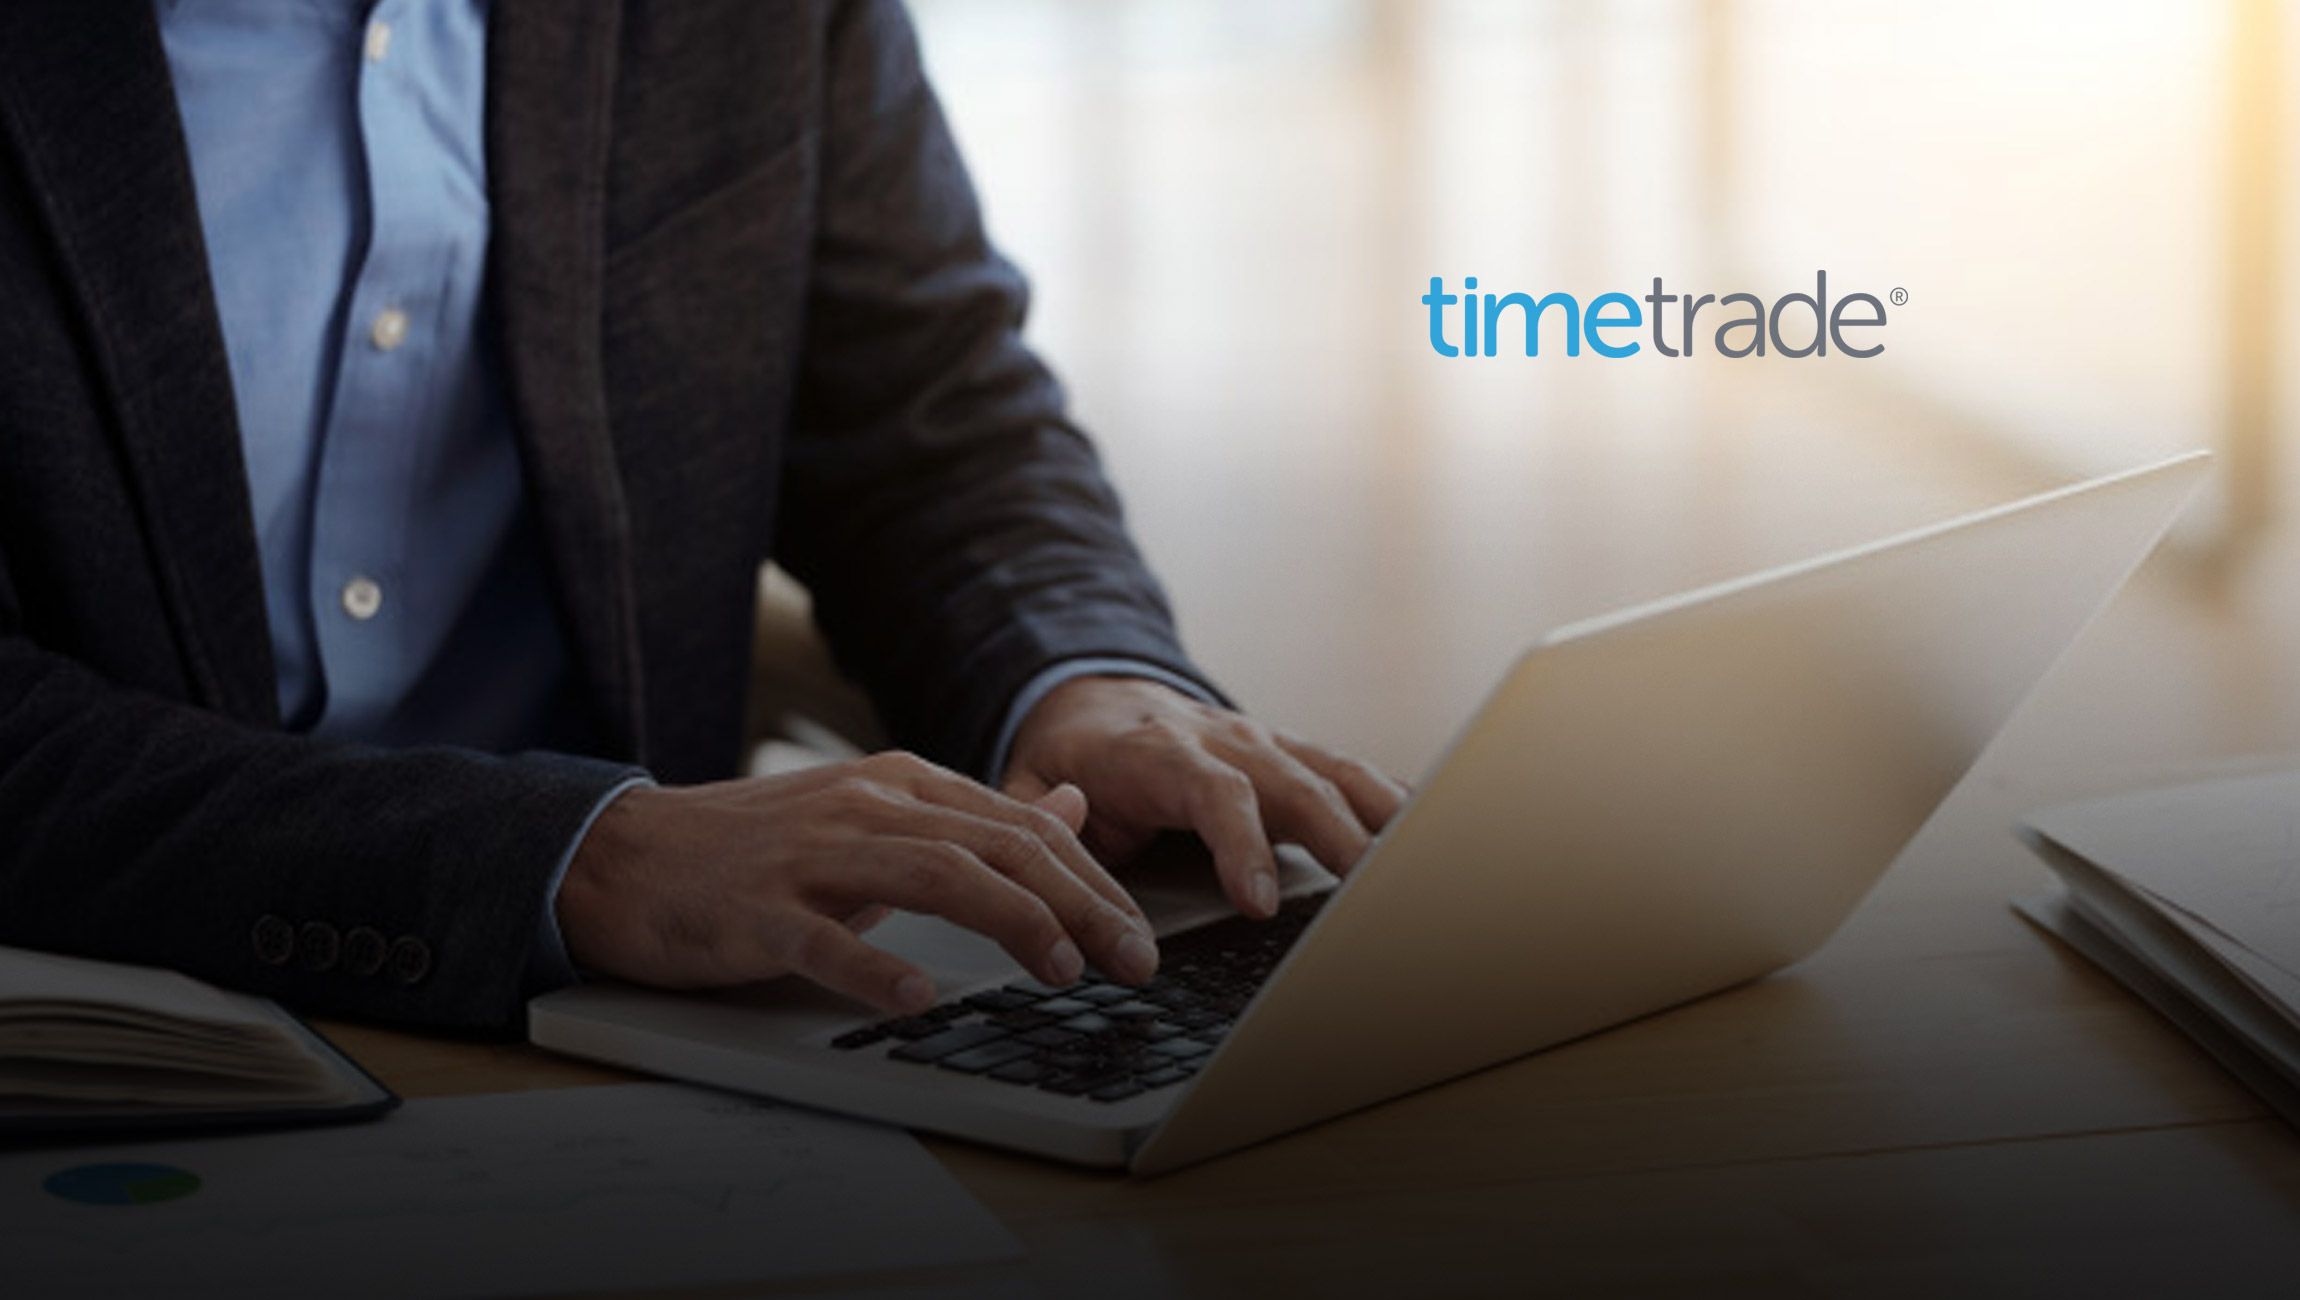 TimeTrade Sync Solves the Data Synchronization Problem Across Platforms